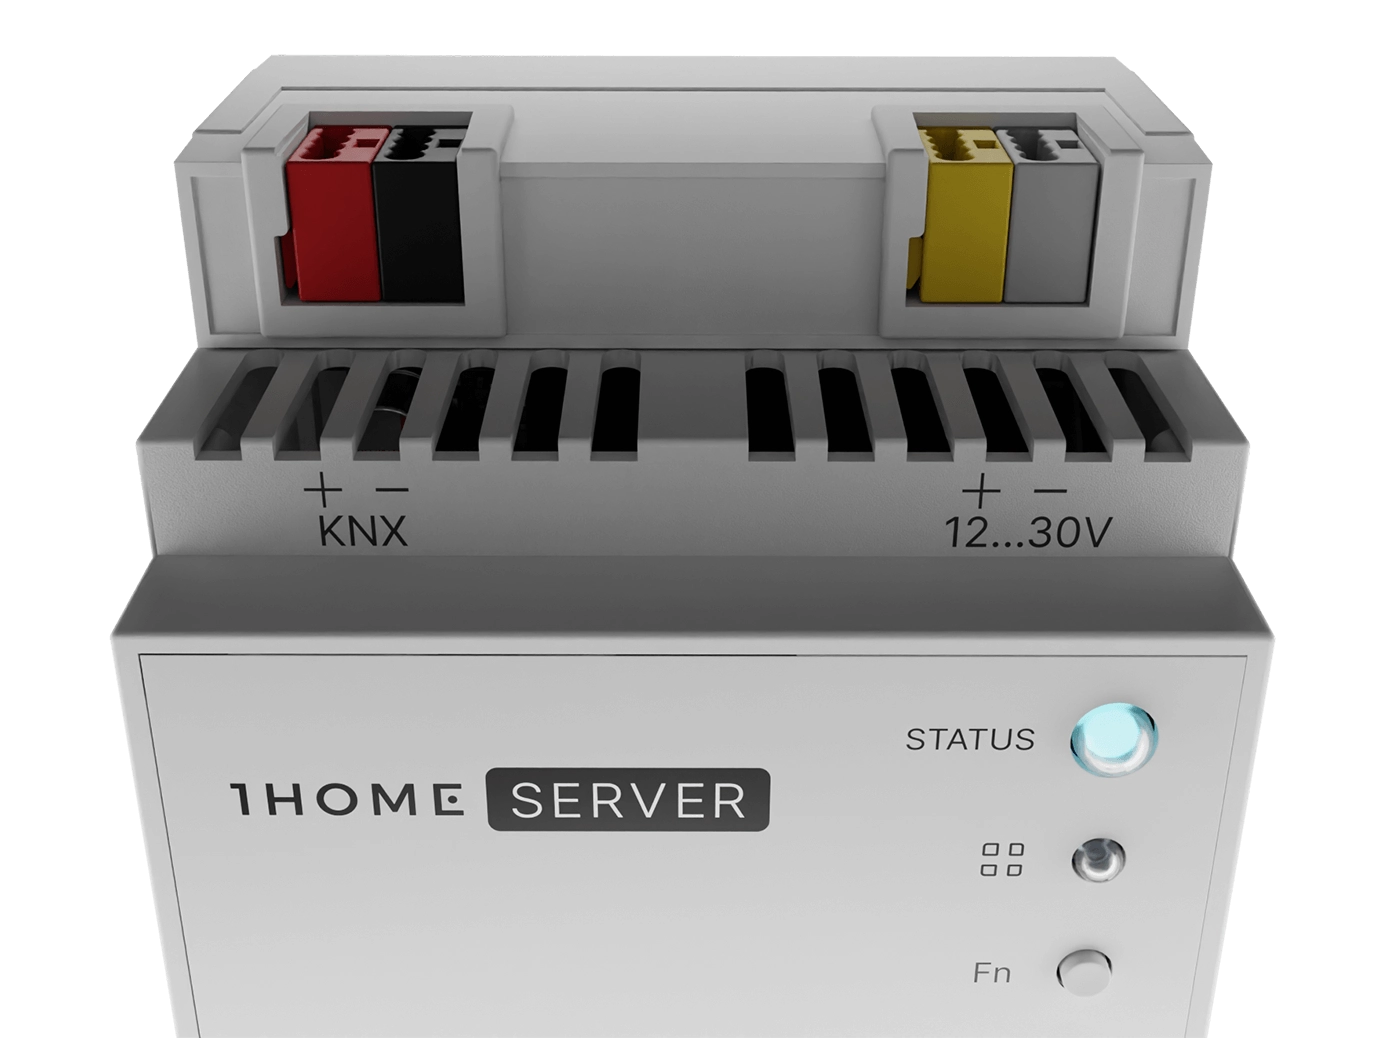 Meet 1Home Server KNX